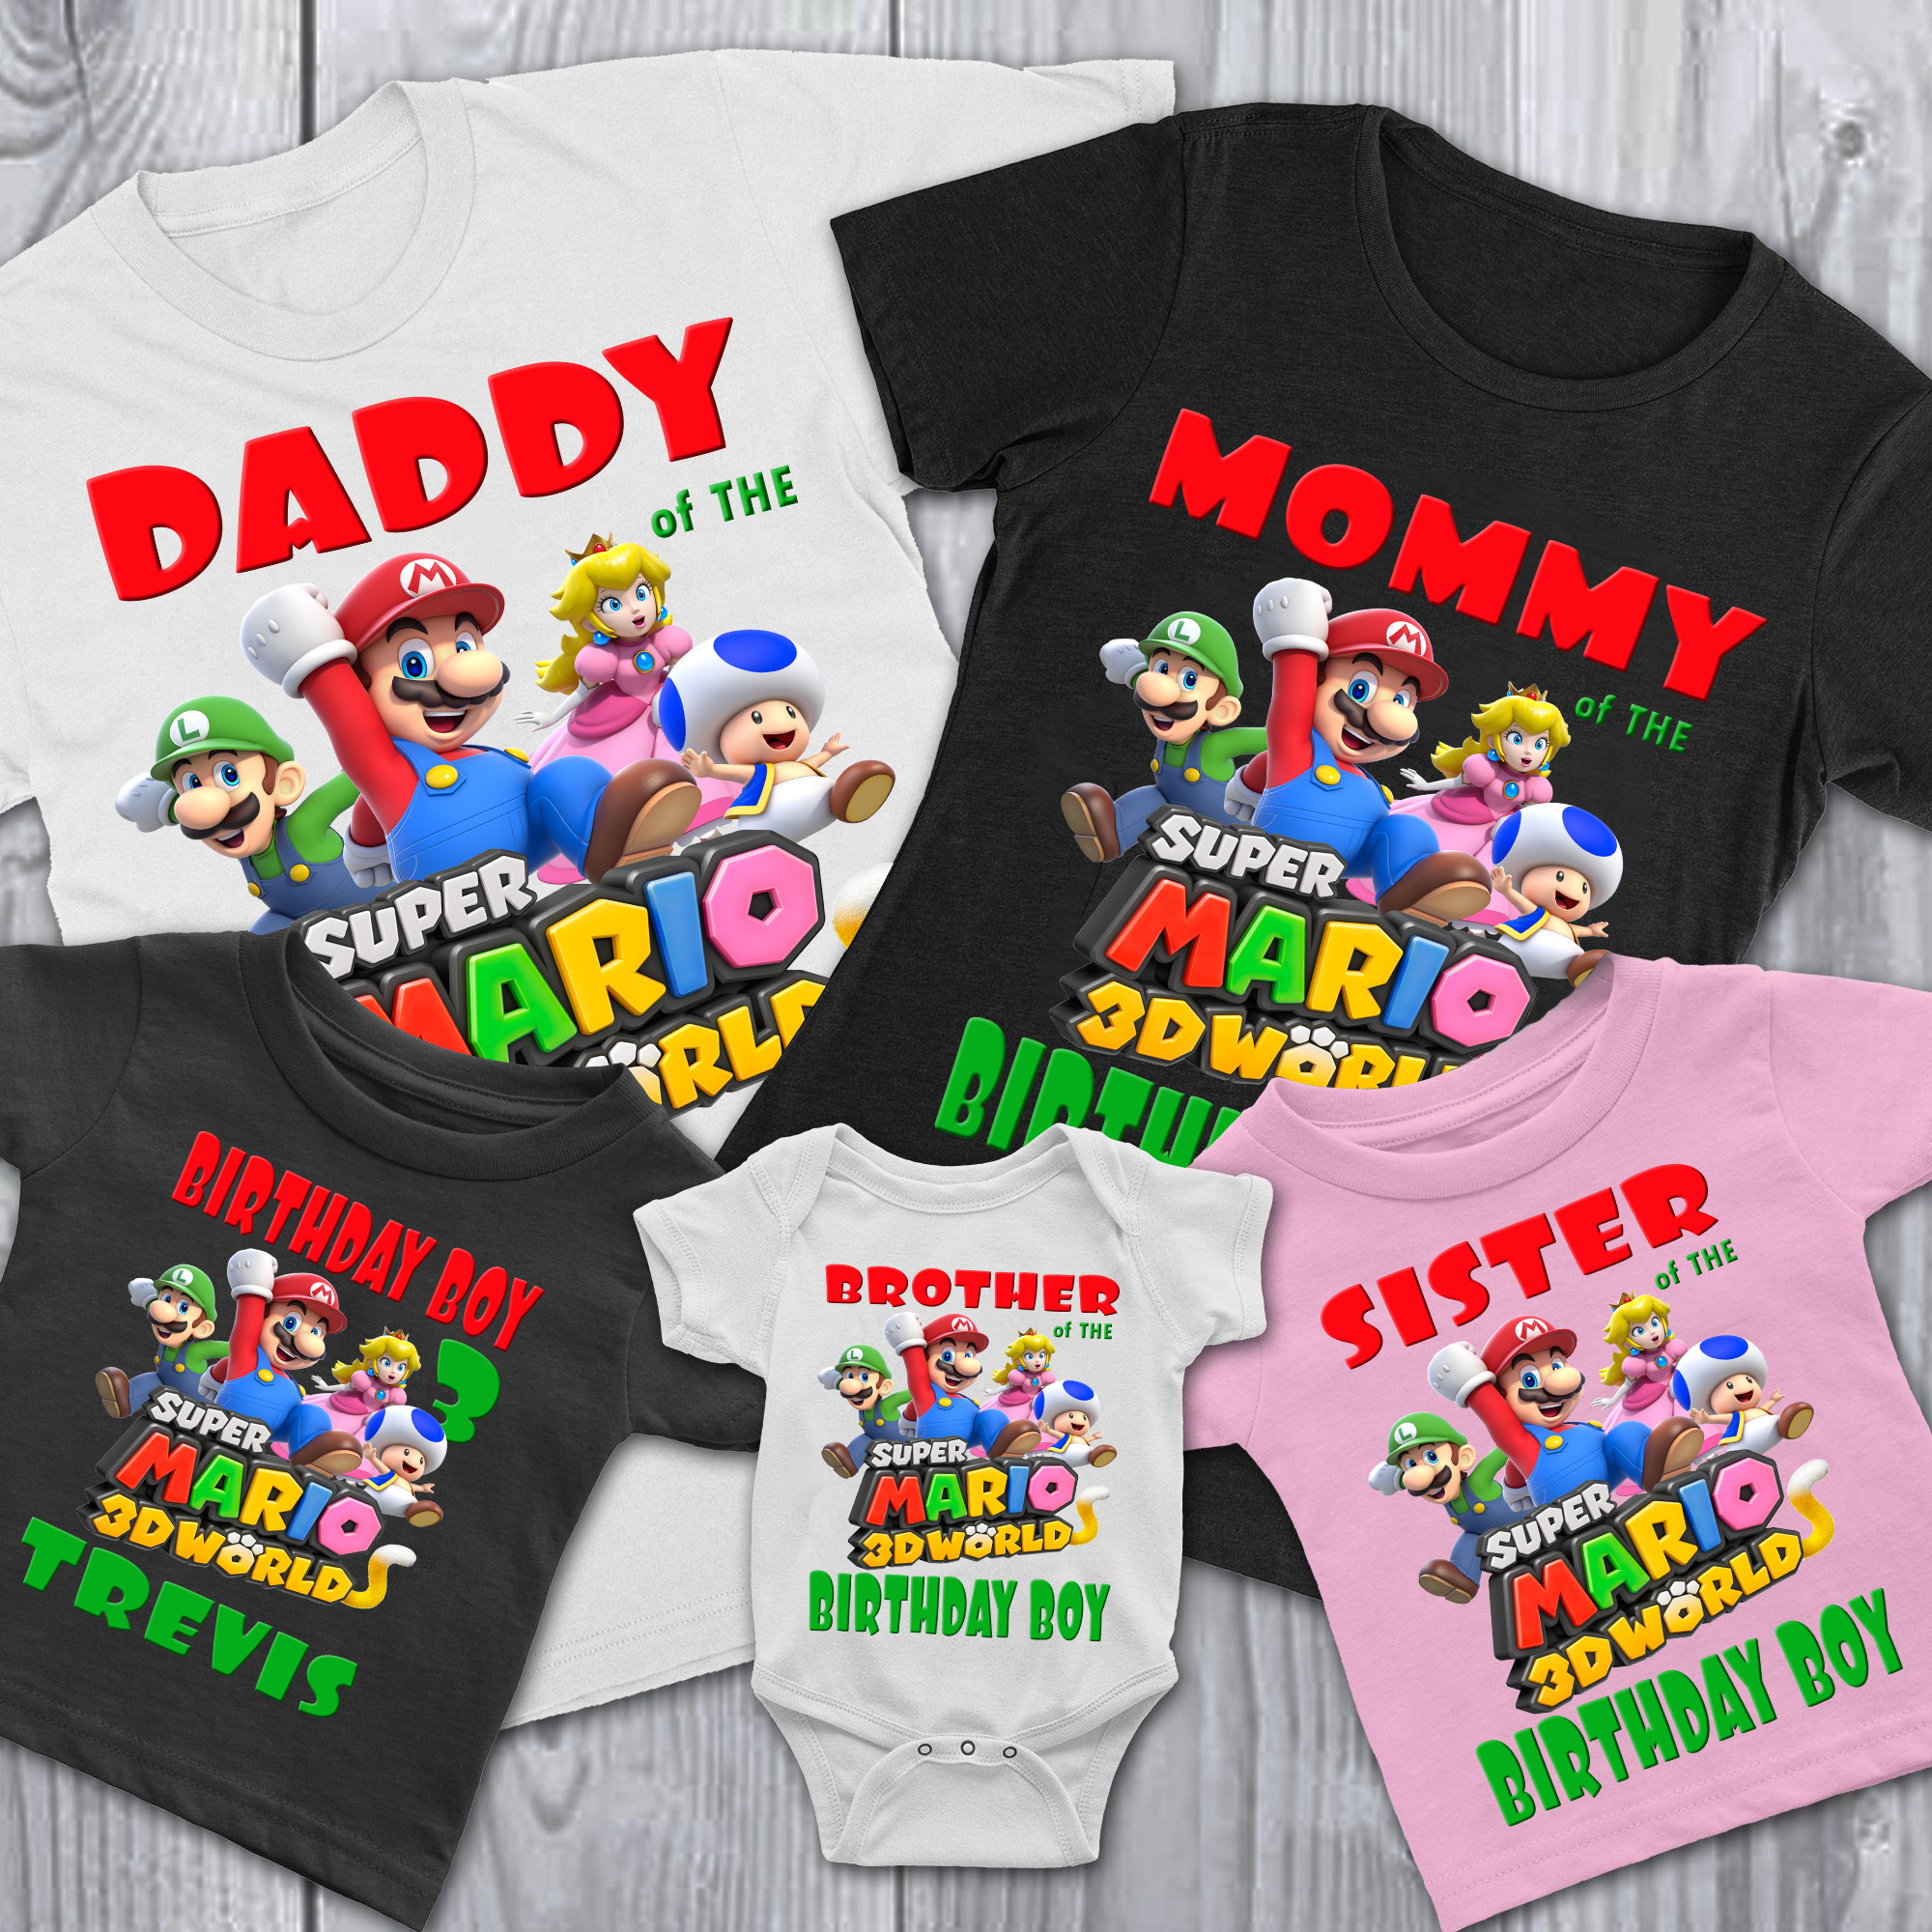 Super Mario birthday shirt, Super Mario family shirts, Super Mario theme party shirts, Super Mario matching shirts, Super Mario tshirt